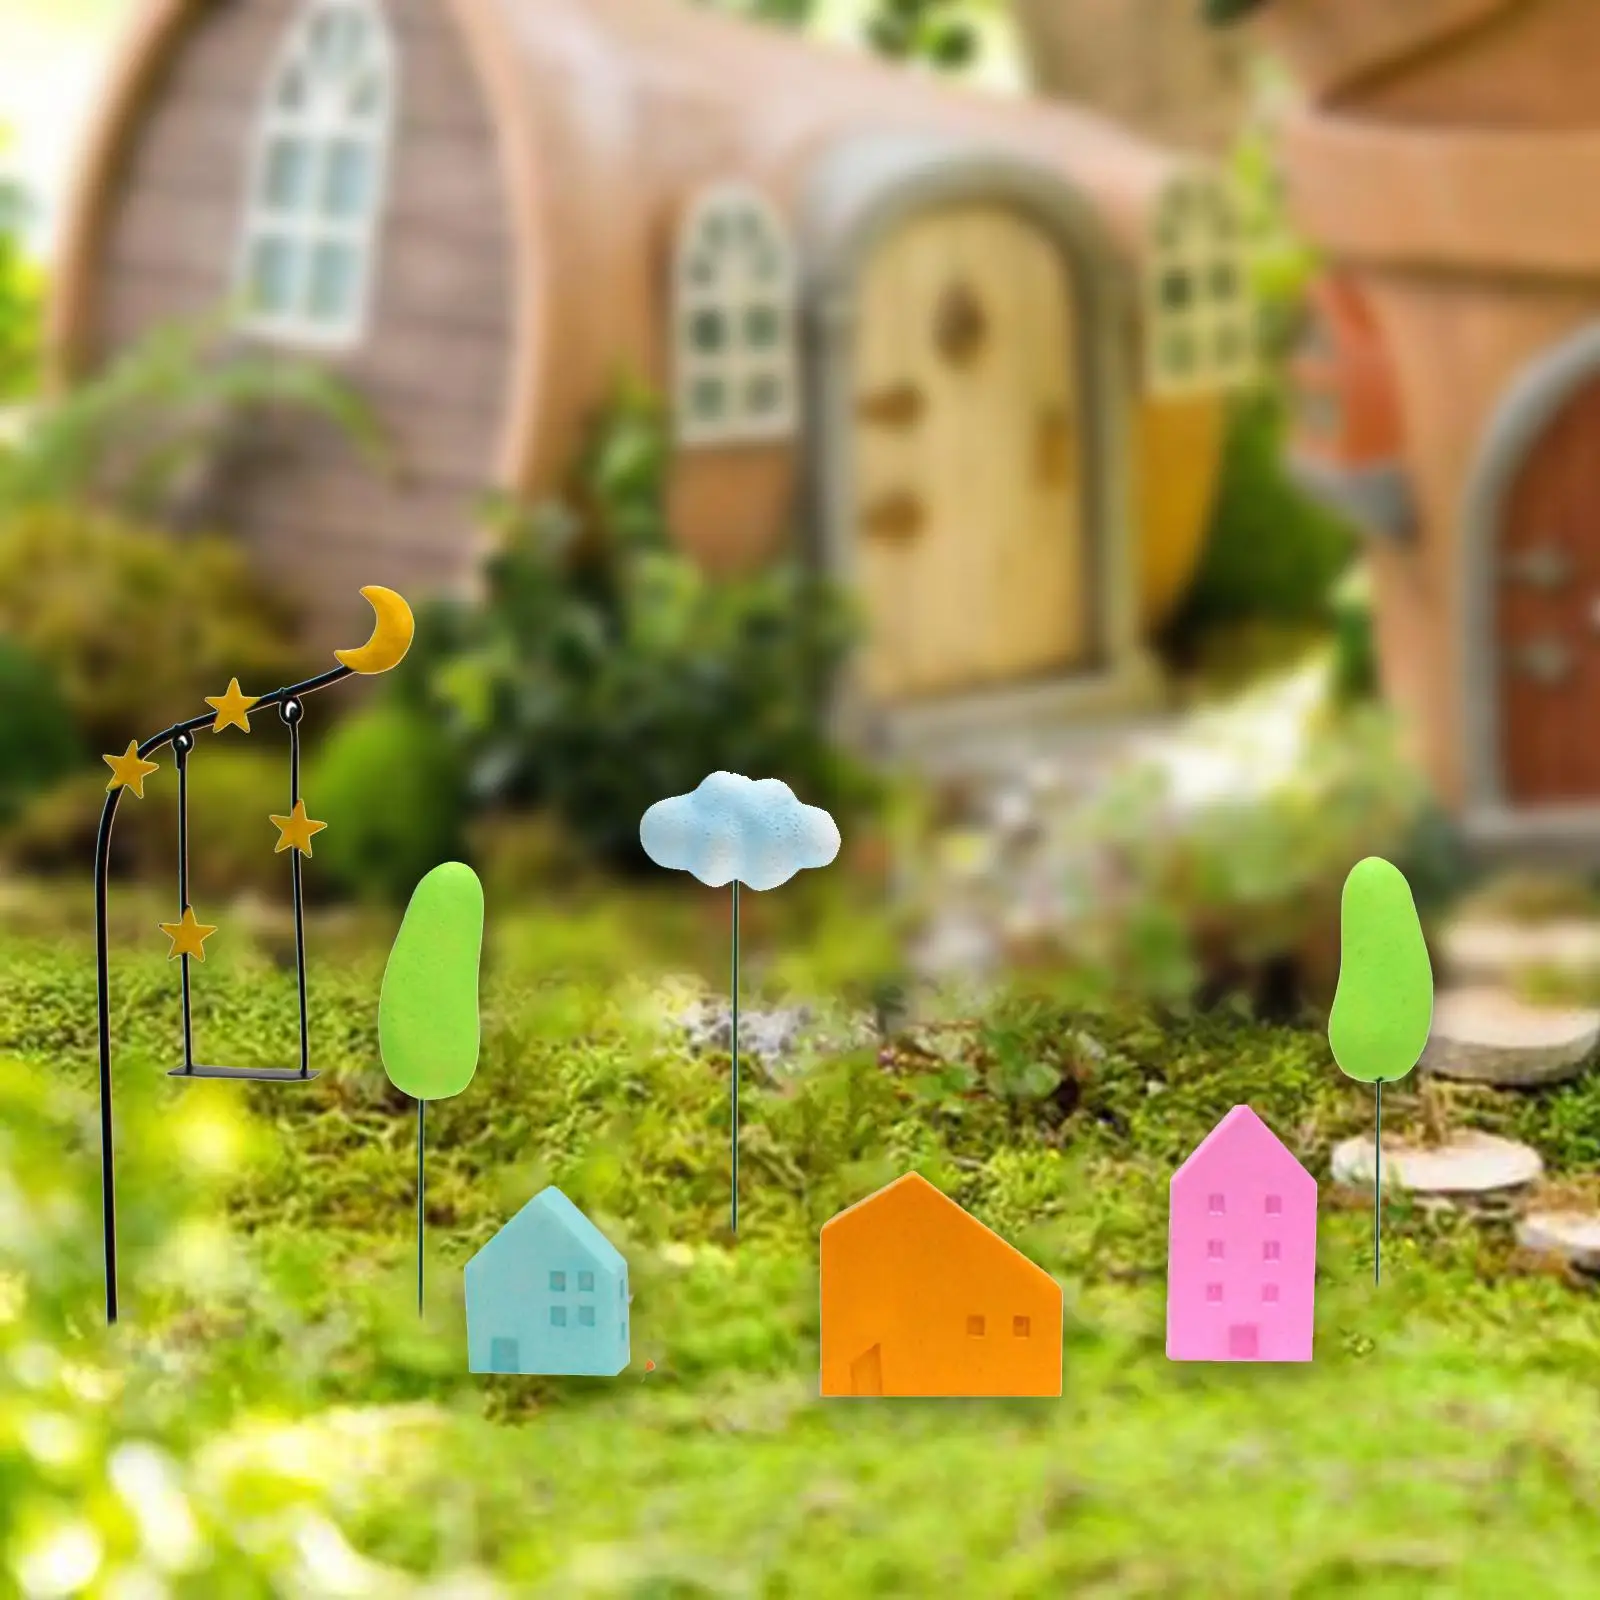 7 Pieces Micro Landscape Ornaments,House Trees Cloud DIY, Garden Accessories for